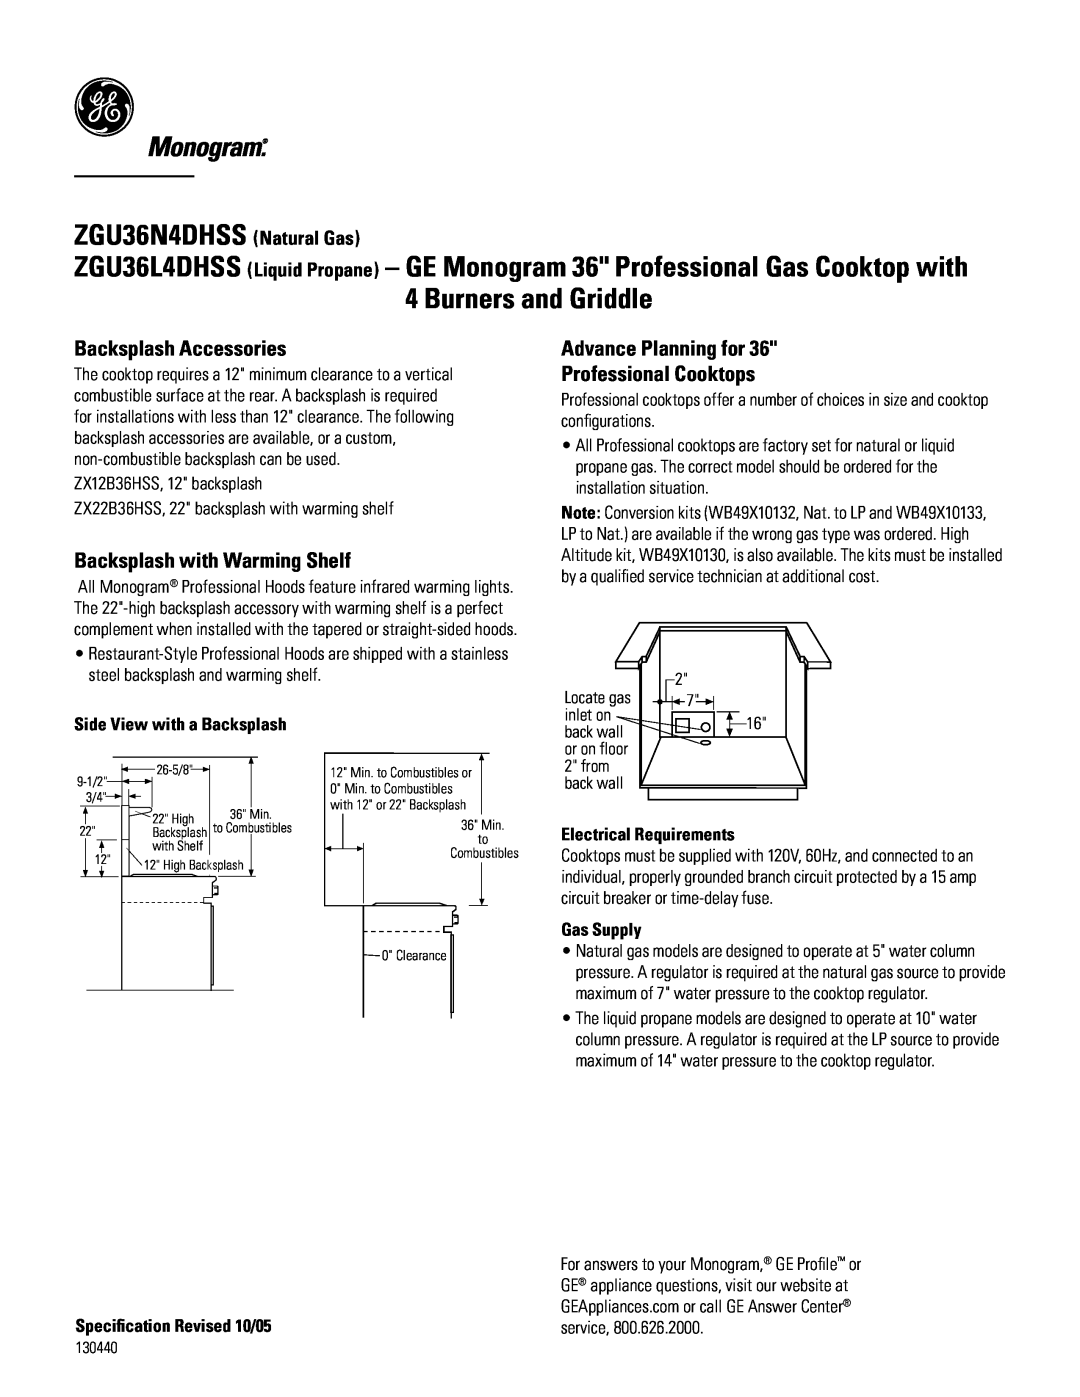 GE Monogram ZGU36L4DHSS Backsplash Accessories, Backsplash with Warming Shelf, Advance Planning for Professional Cooktops 